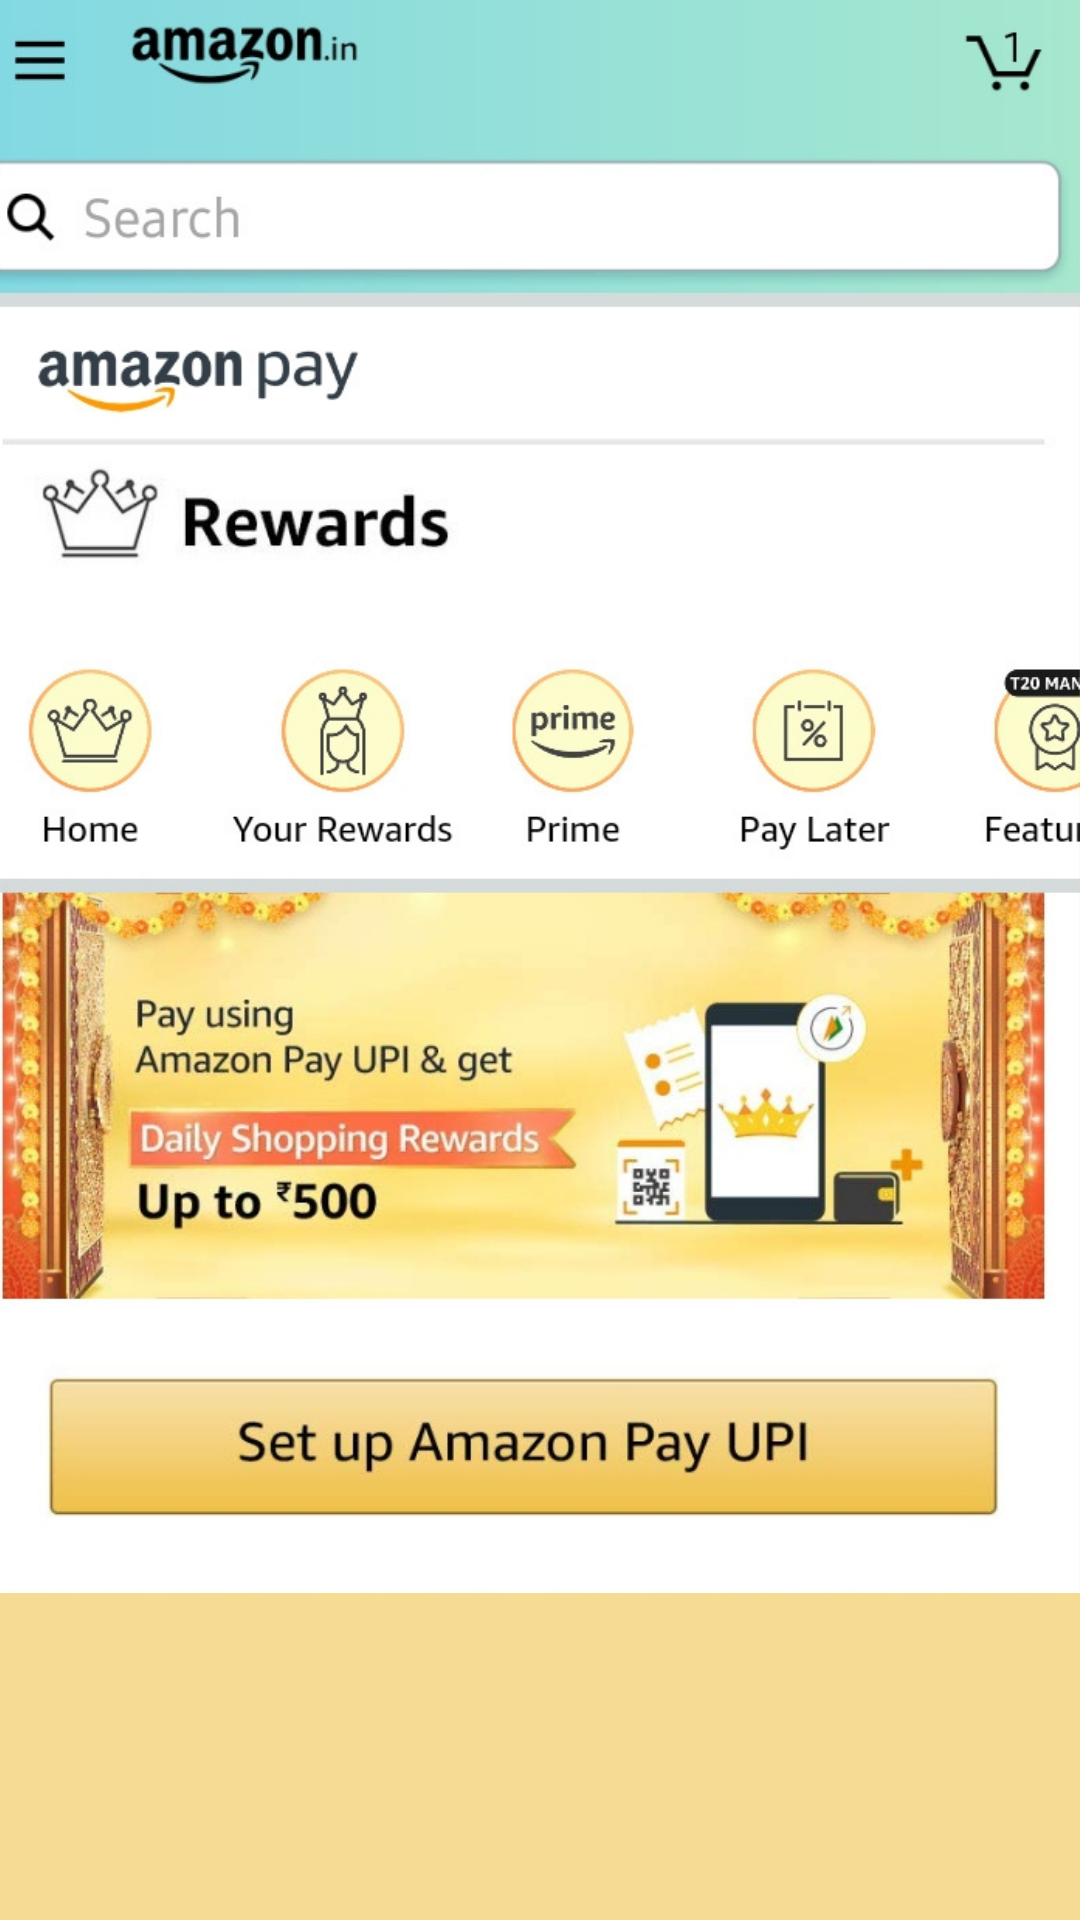 Amazon Pay UPI cashback offer